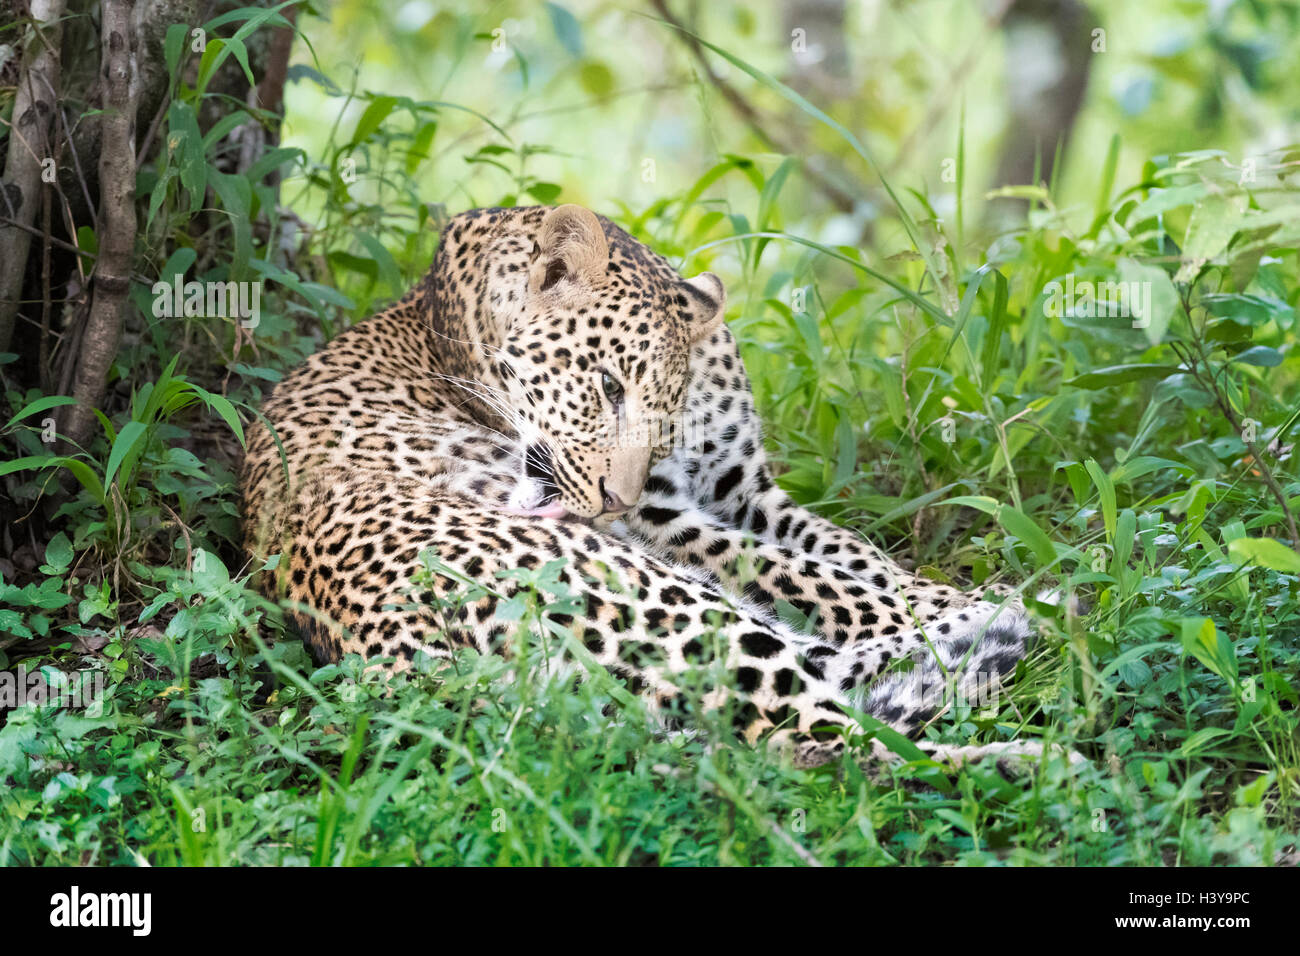 Afrikanischer Leopard (Panthera Pardus) im Wald liegend, reserve sein Fell Reinigung Masai Mara national, Kenia. Stockfoto